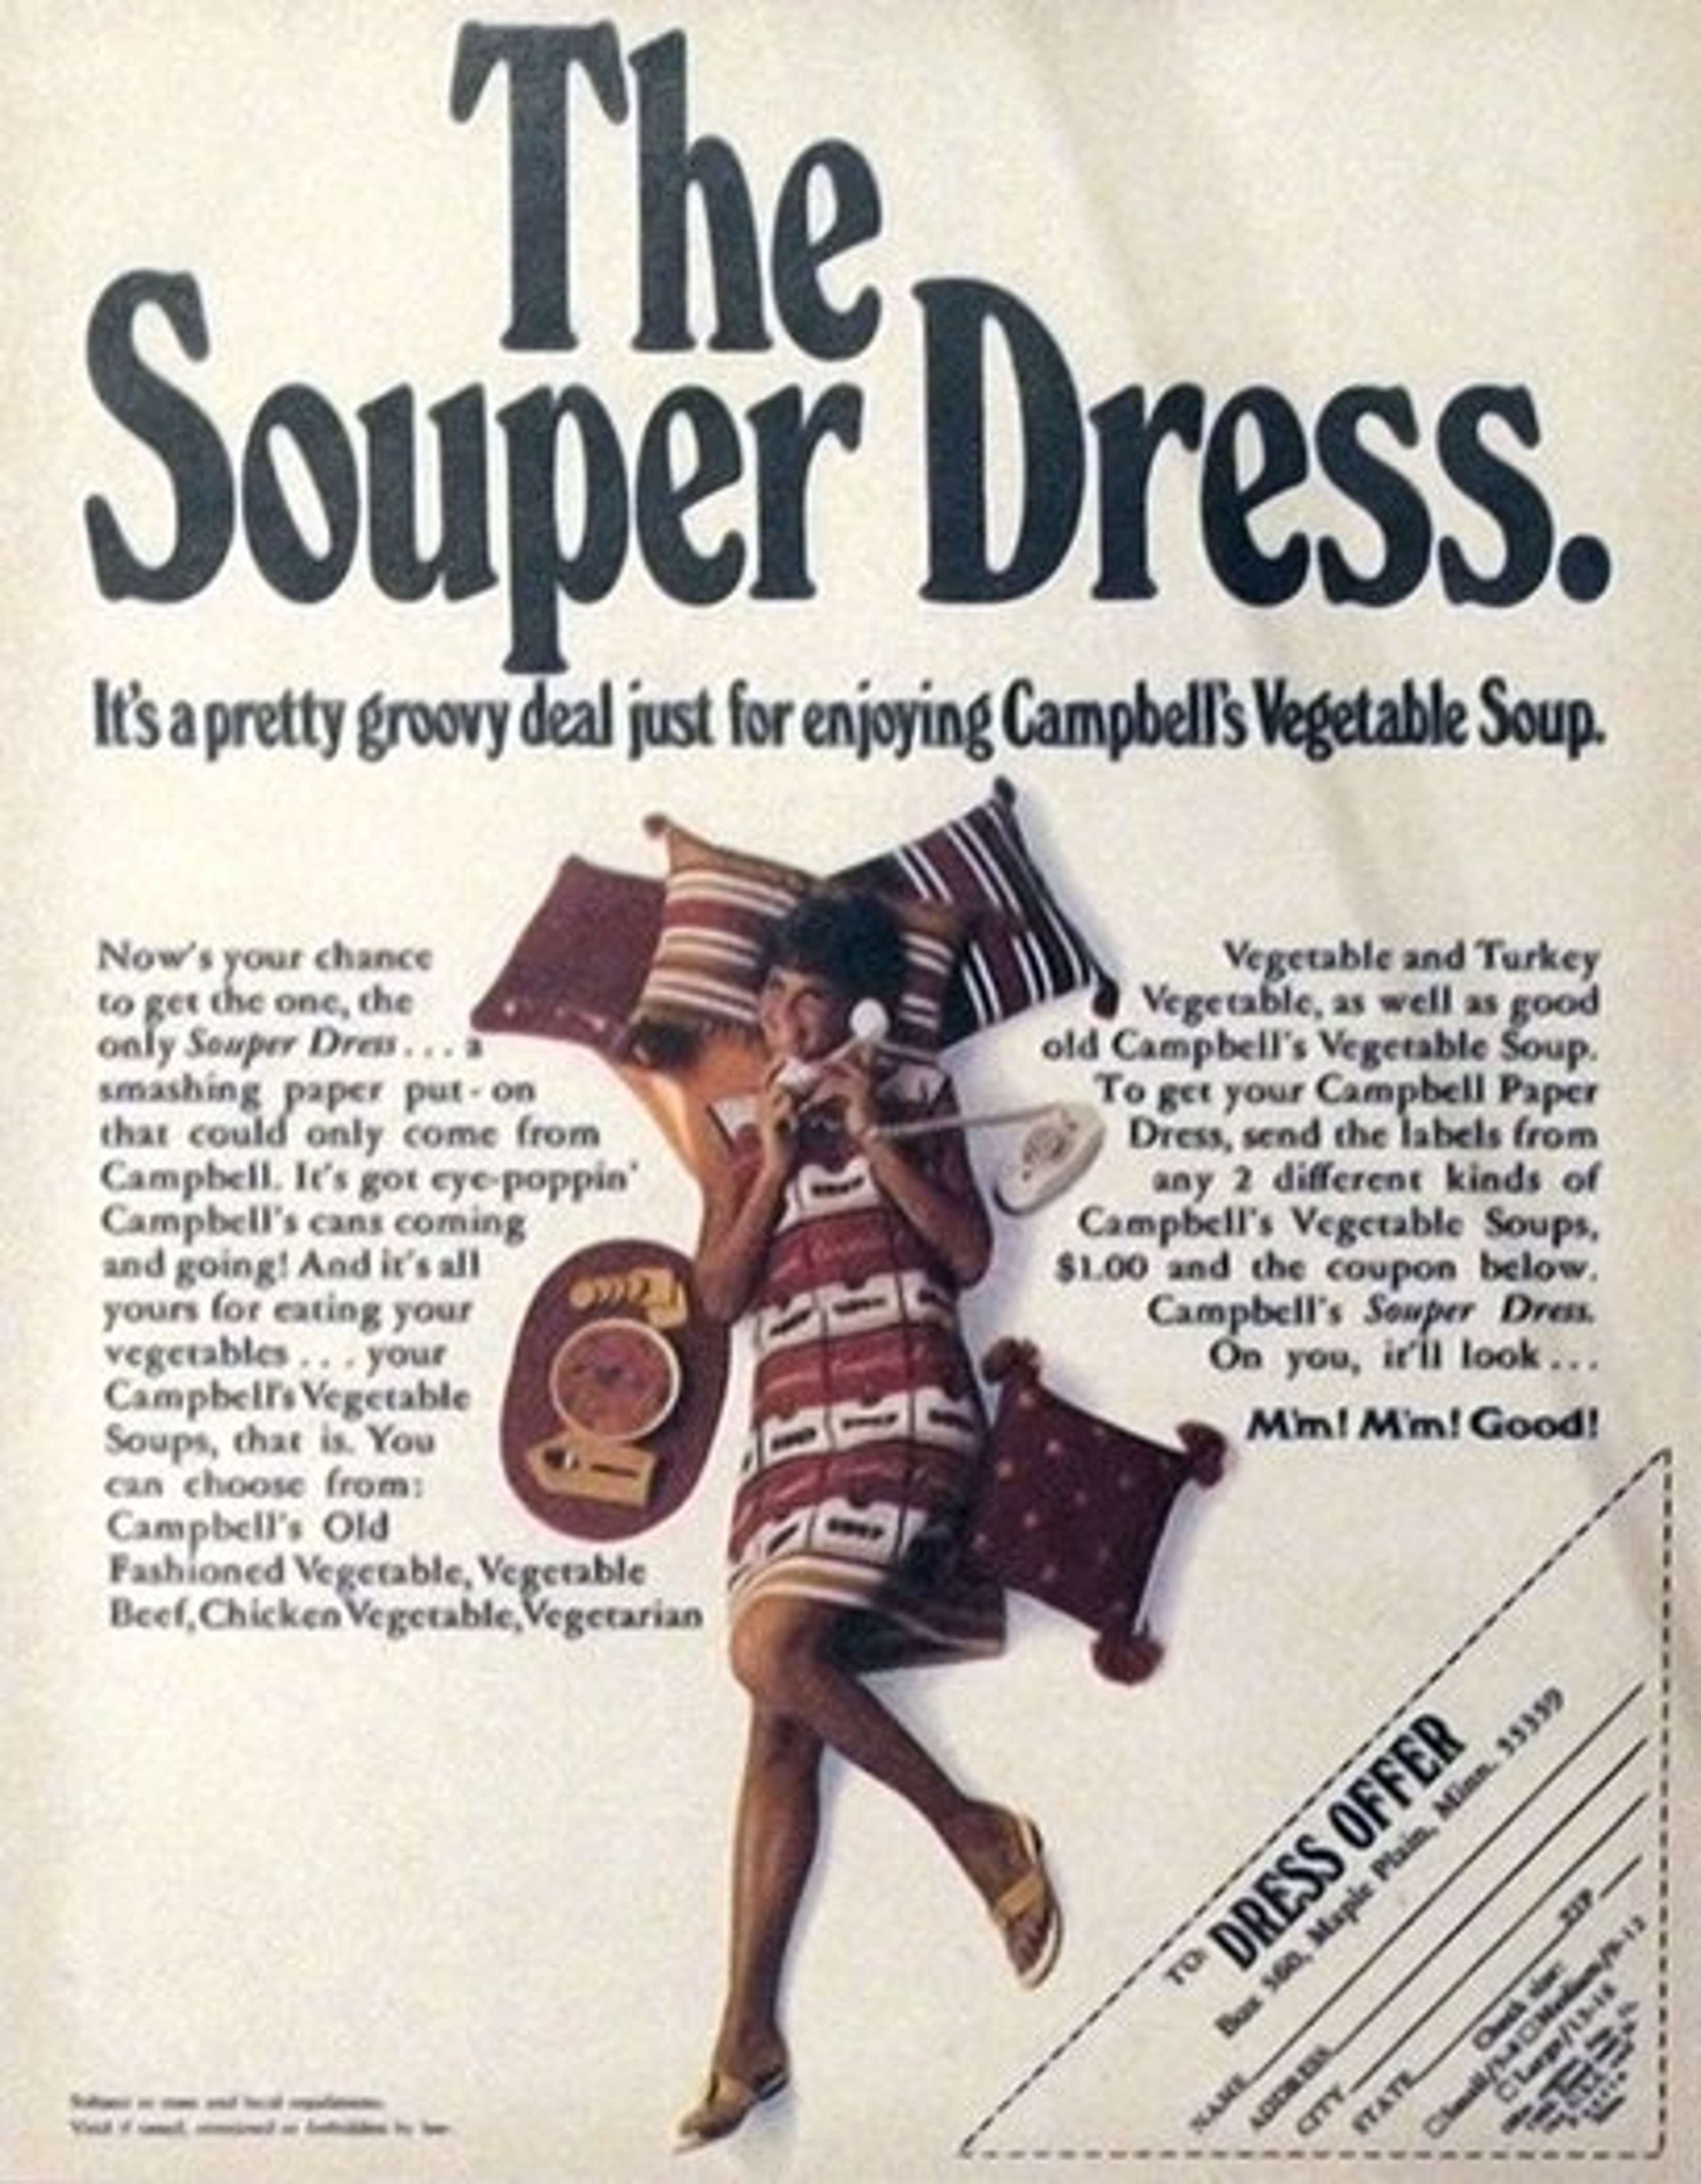 The Souper Dress, Campbell's